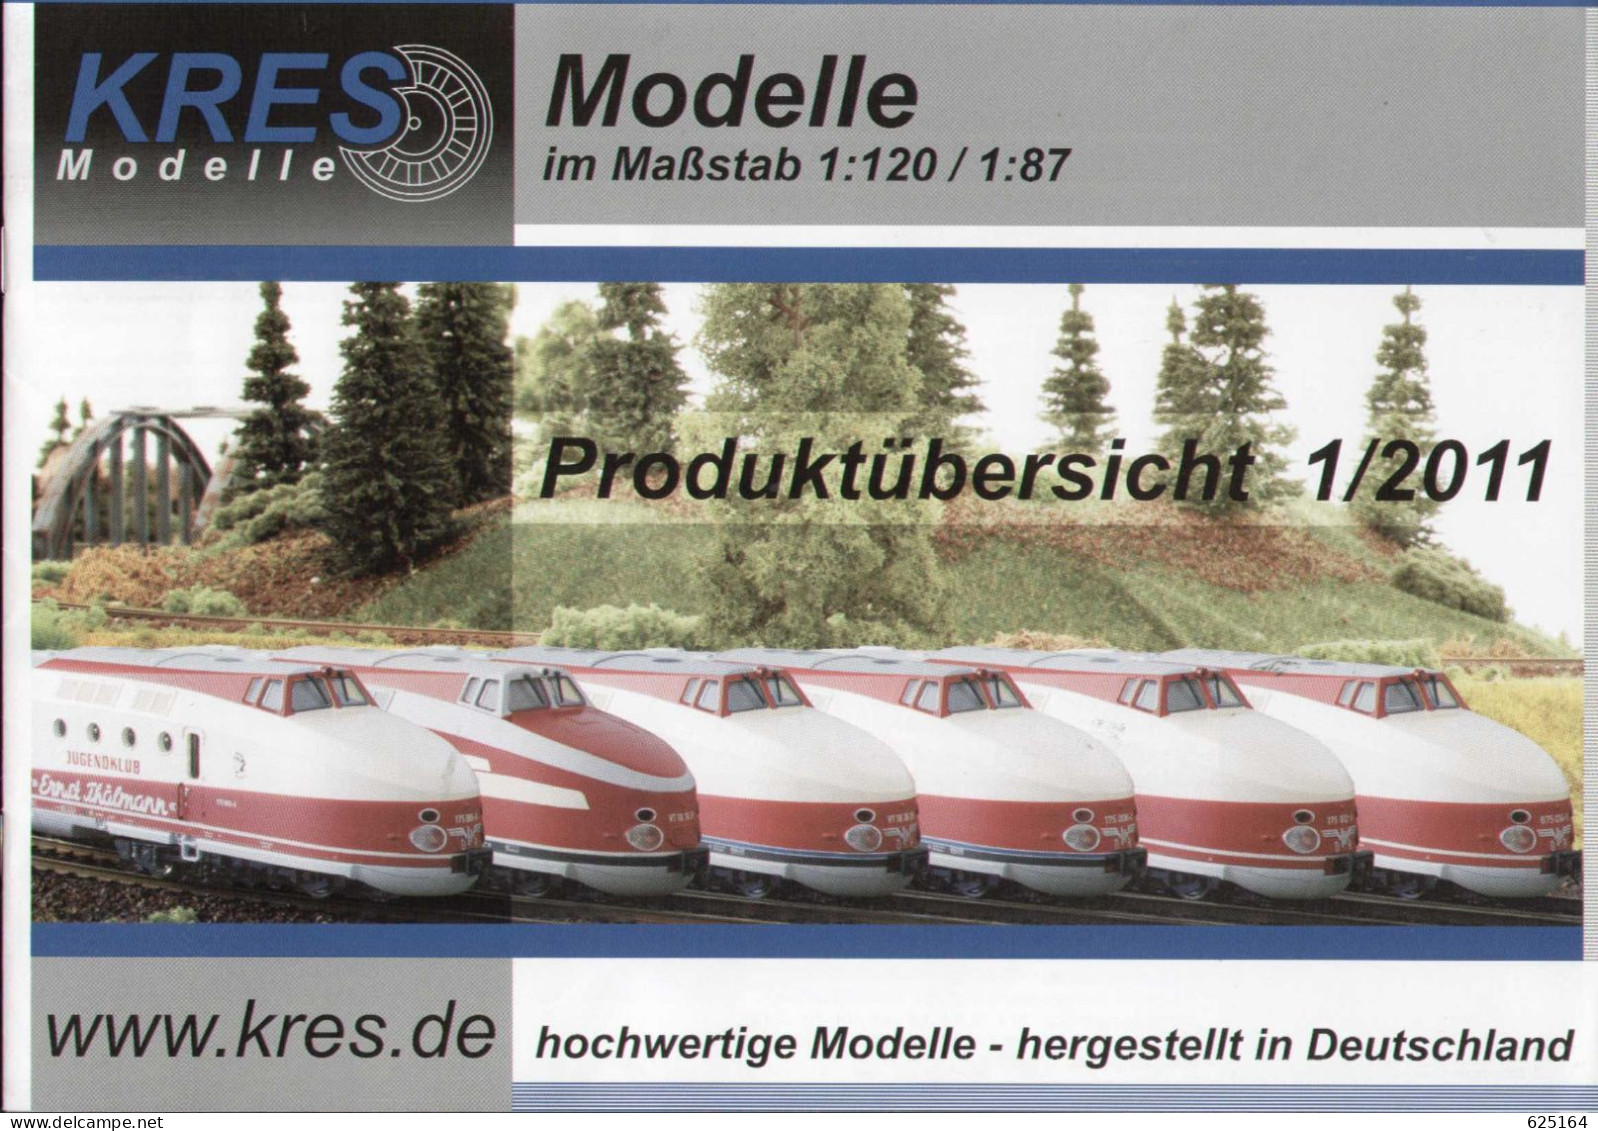 Catalogue KRES-MODELLE 2011.1 Produktübersicht Spur TT 1:120 / H0 1:87 - German